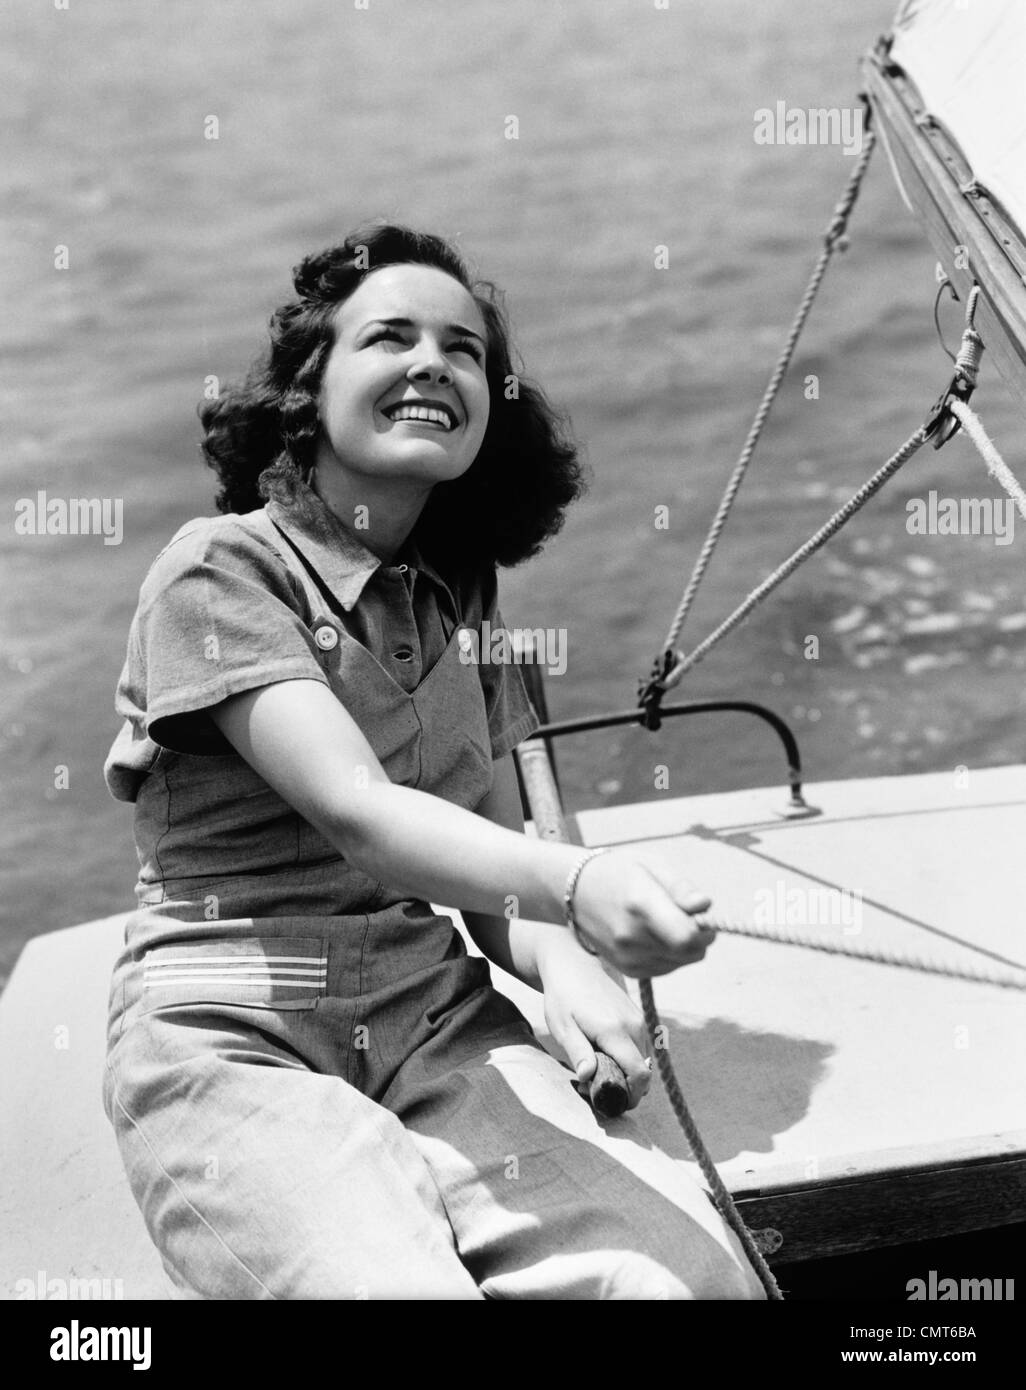 1940s WOMAN SAILOR SMILING SAILING BOAT OUTDOOR Stock Photo